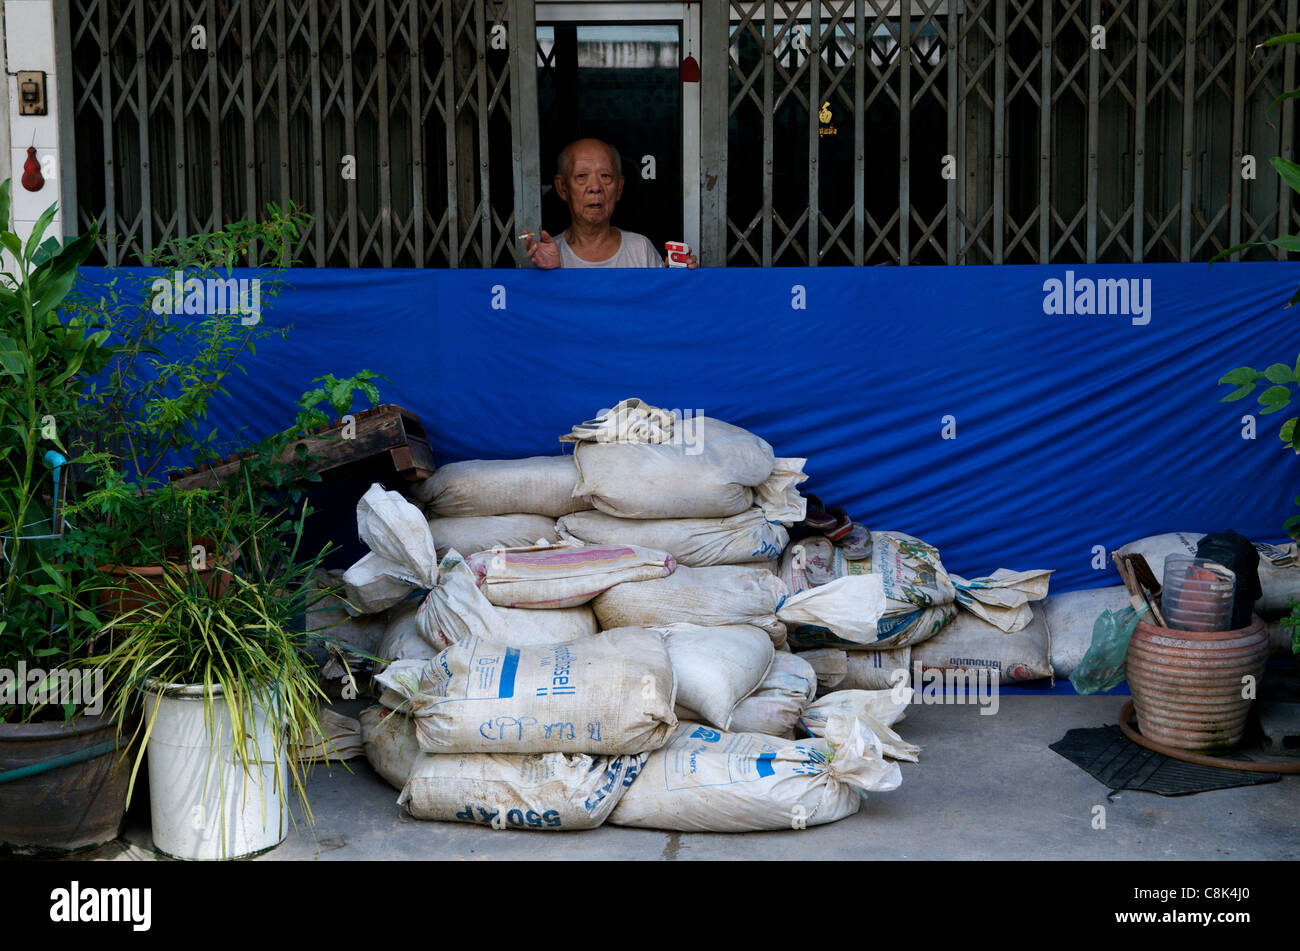 Elderly Bangkok resident prepares for the flood w/ sandbags in front of his shophouse, Sukhumvit Road, Bangkok, Thailand. credit: Kraig Lieb Stock Photo